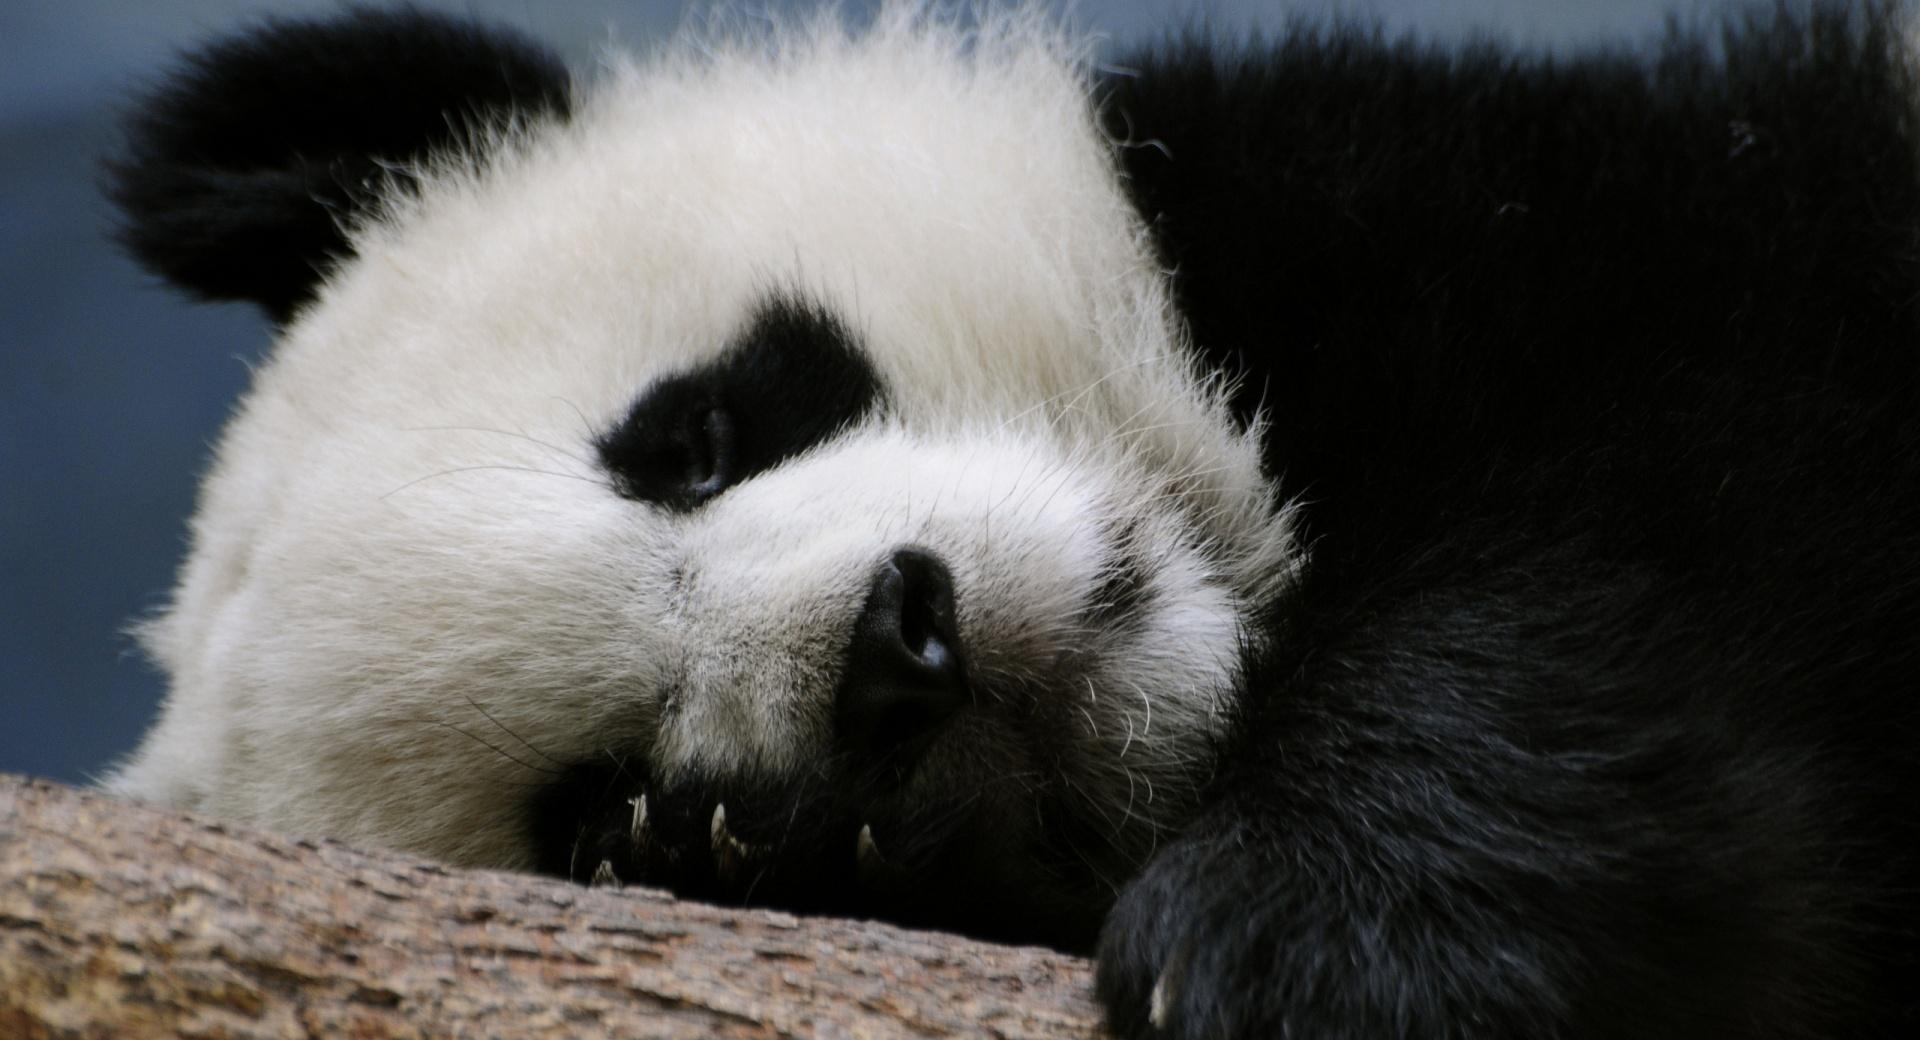 Sleeping Panda at 1280 x 960 size wallpapers HD quality